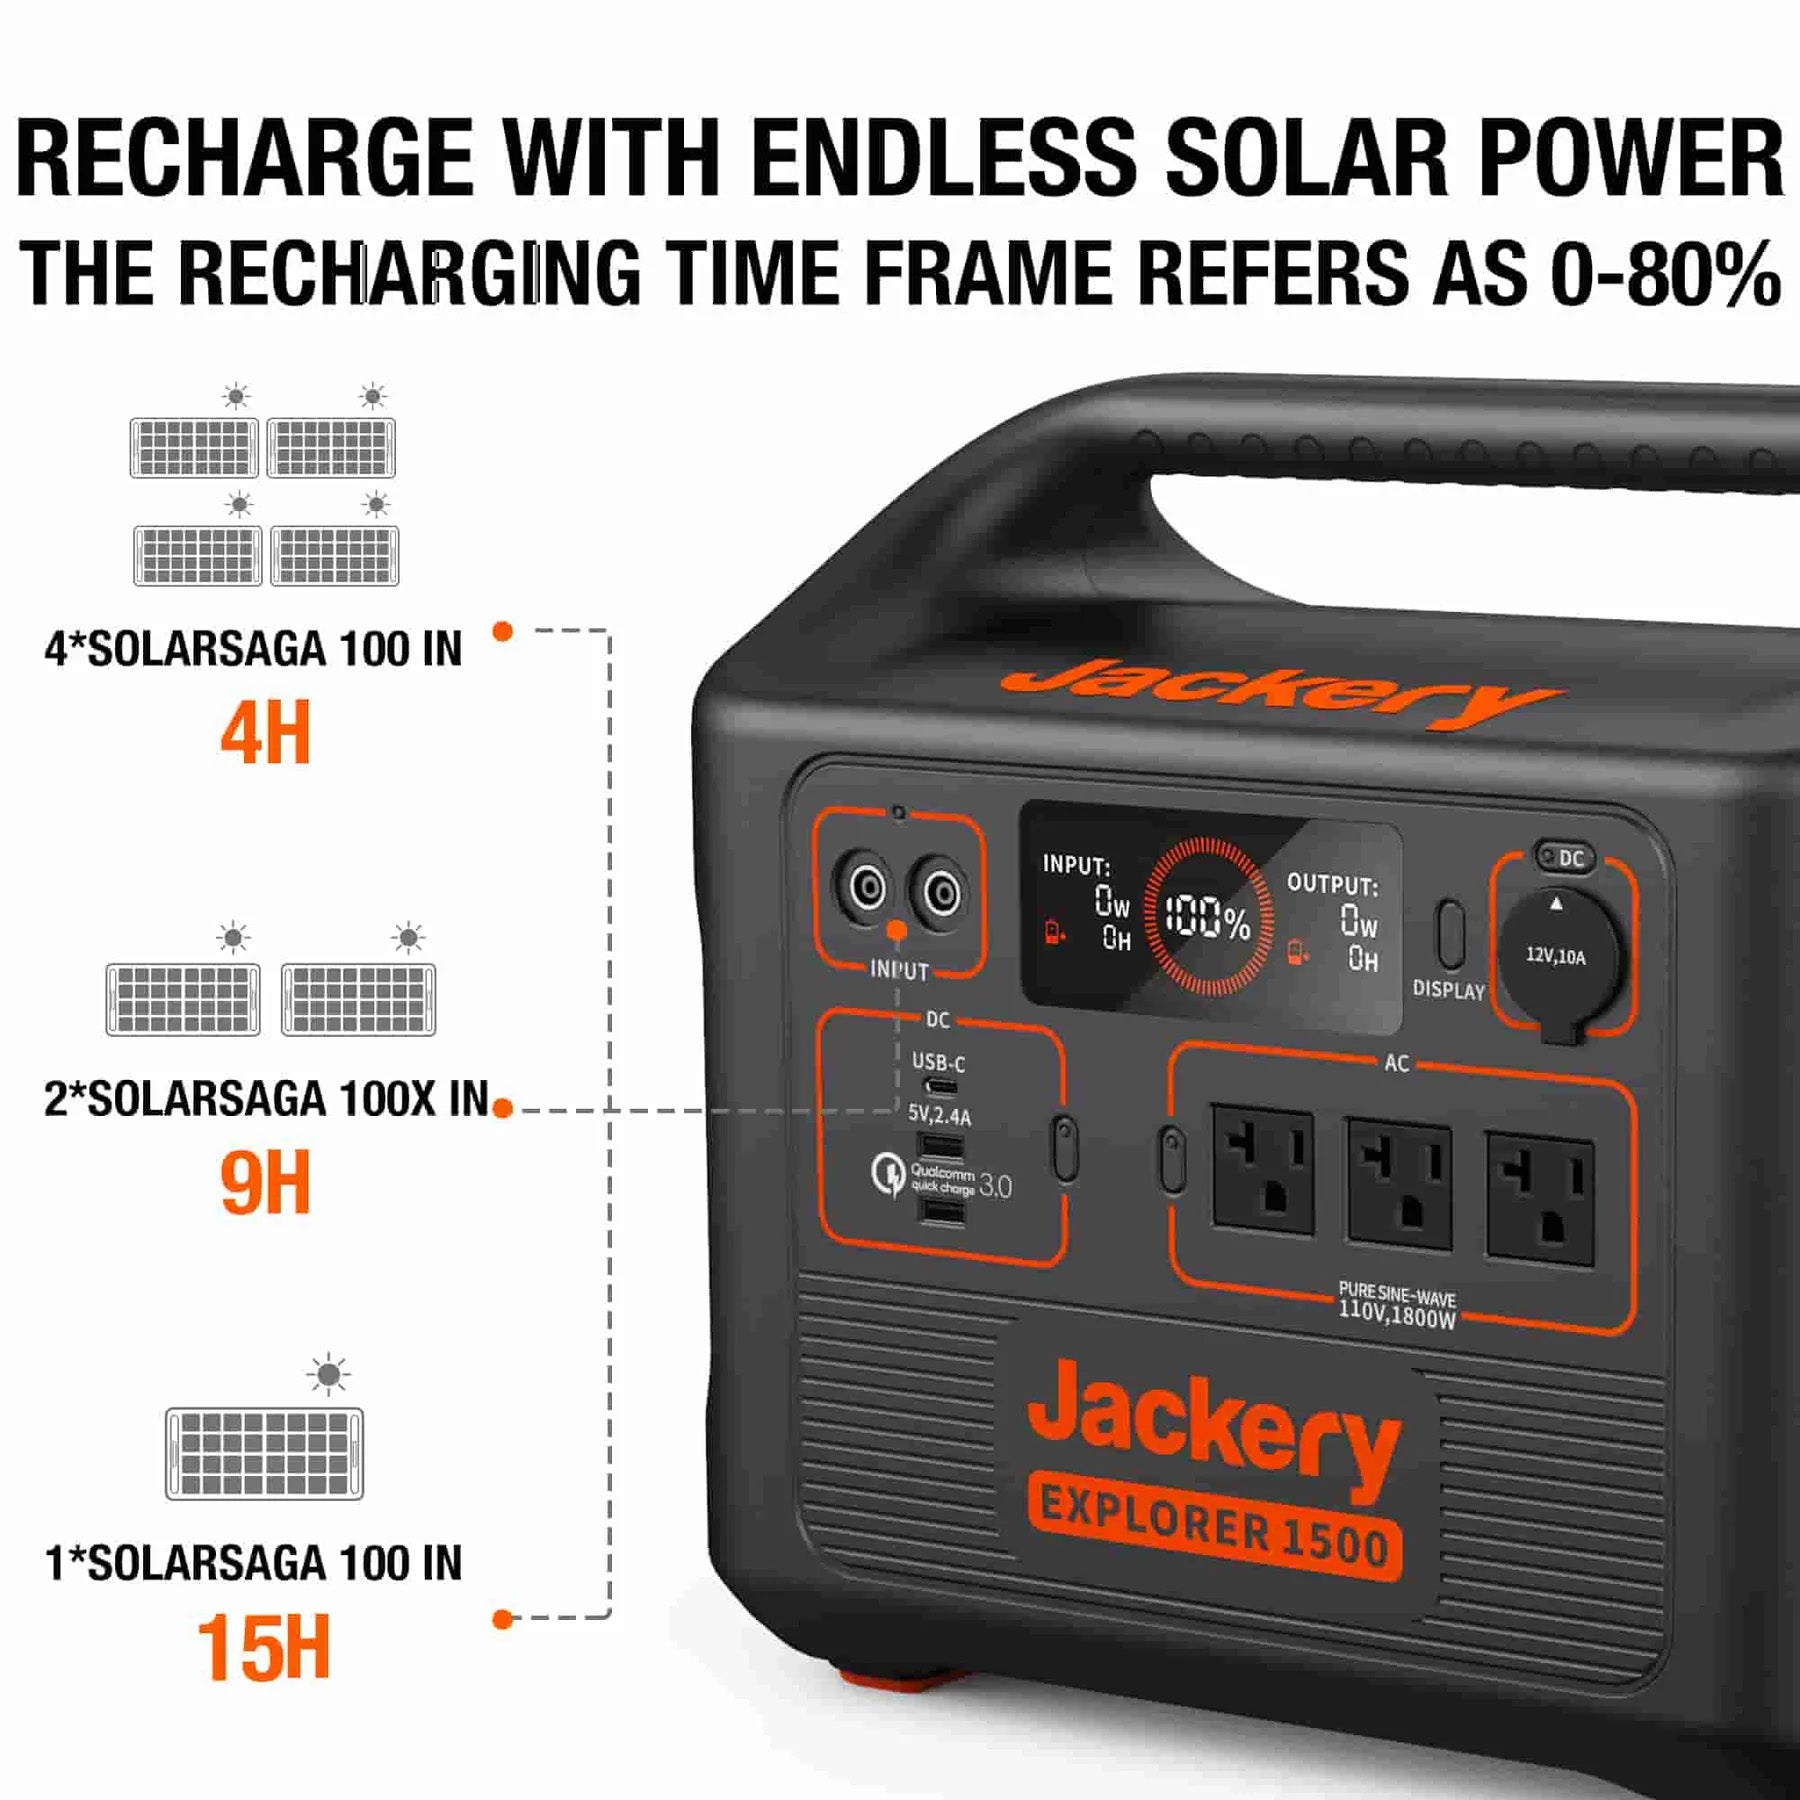 Jackery Solar Generator 1500 - Recharge With Endless Solar Power